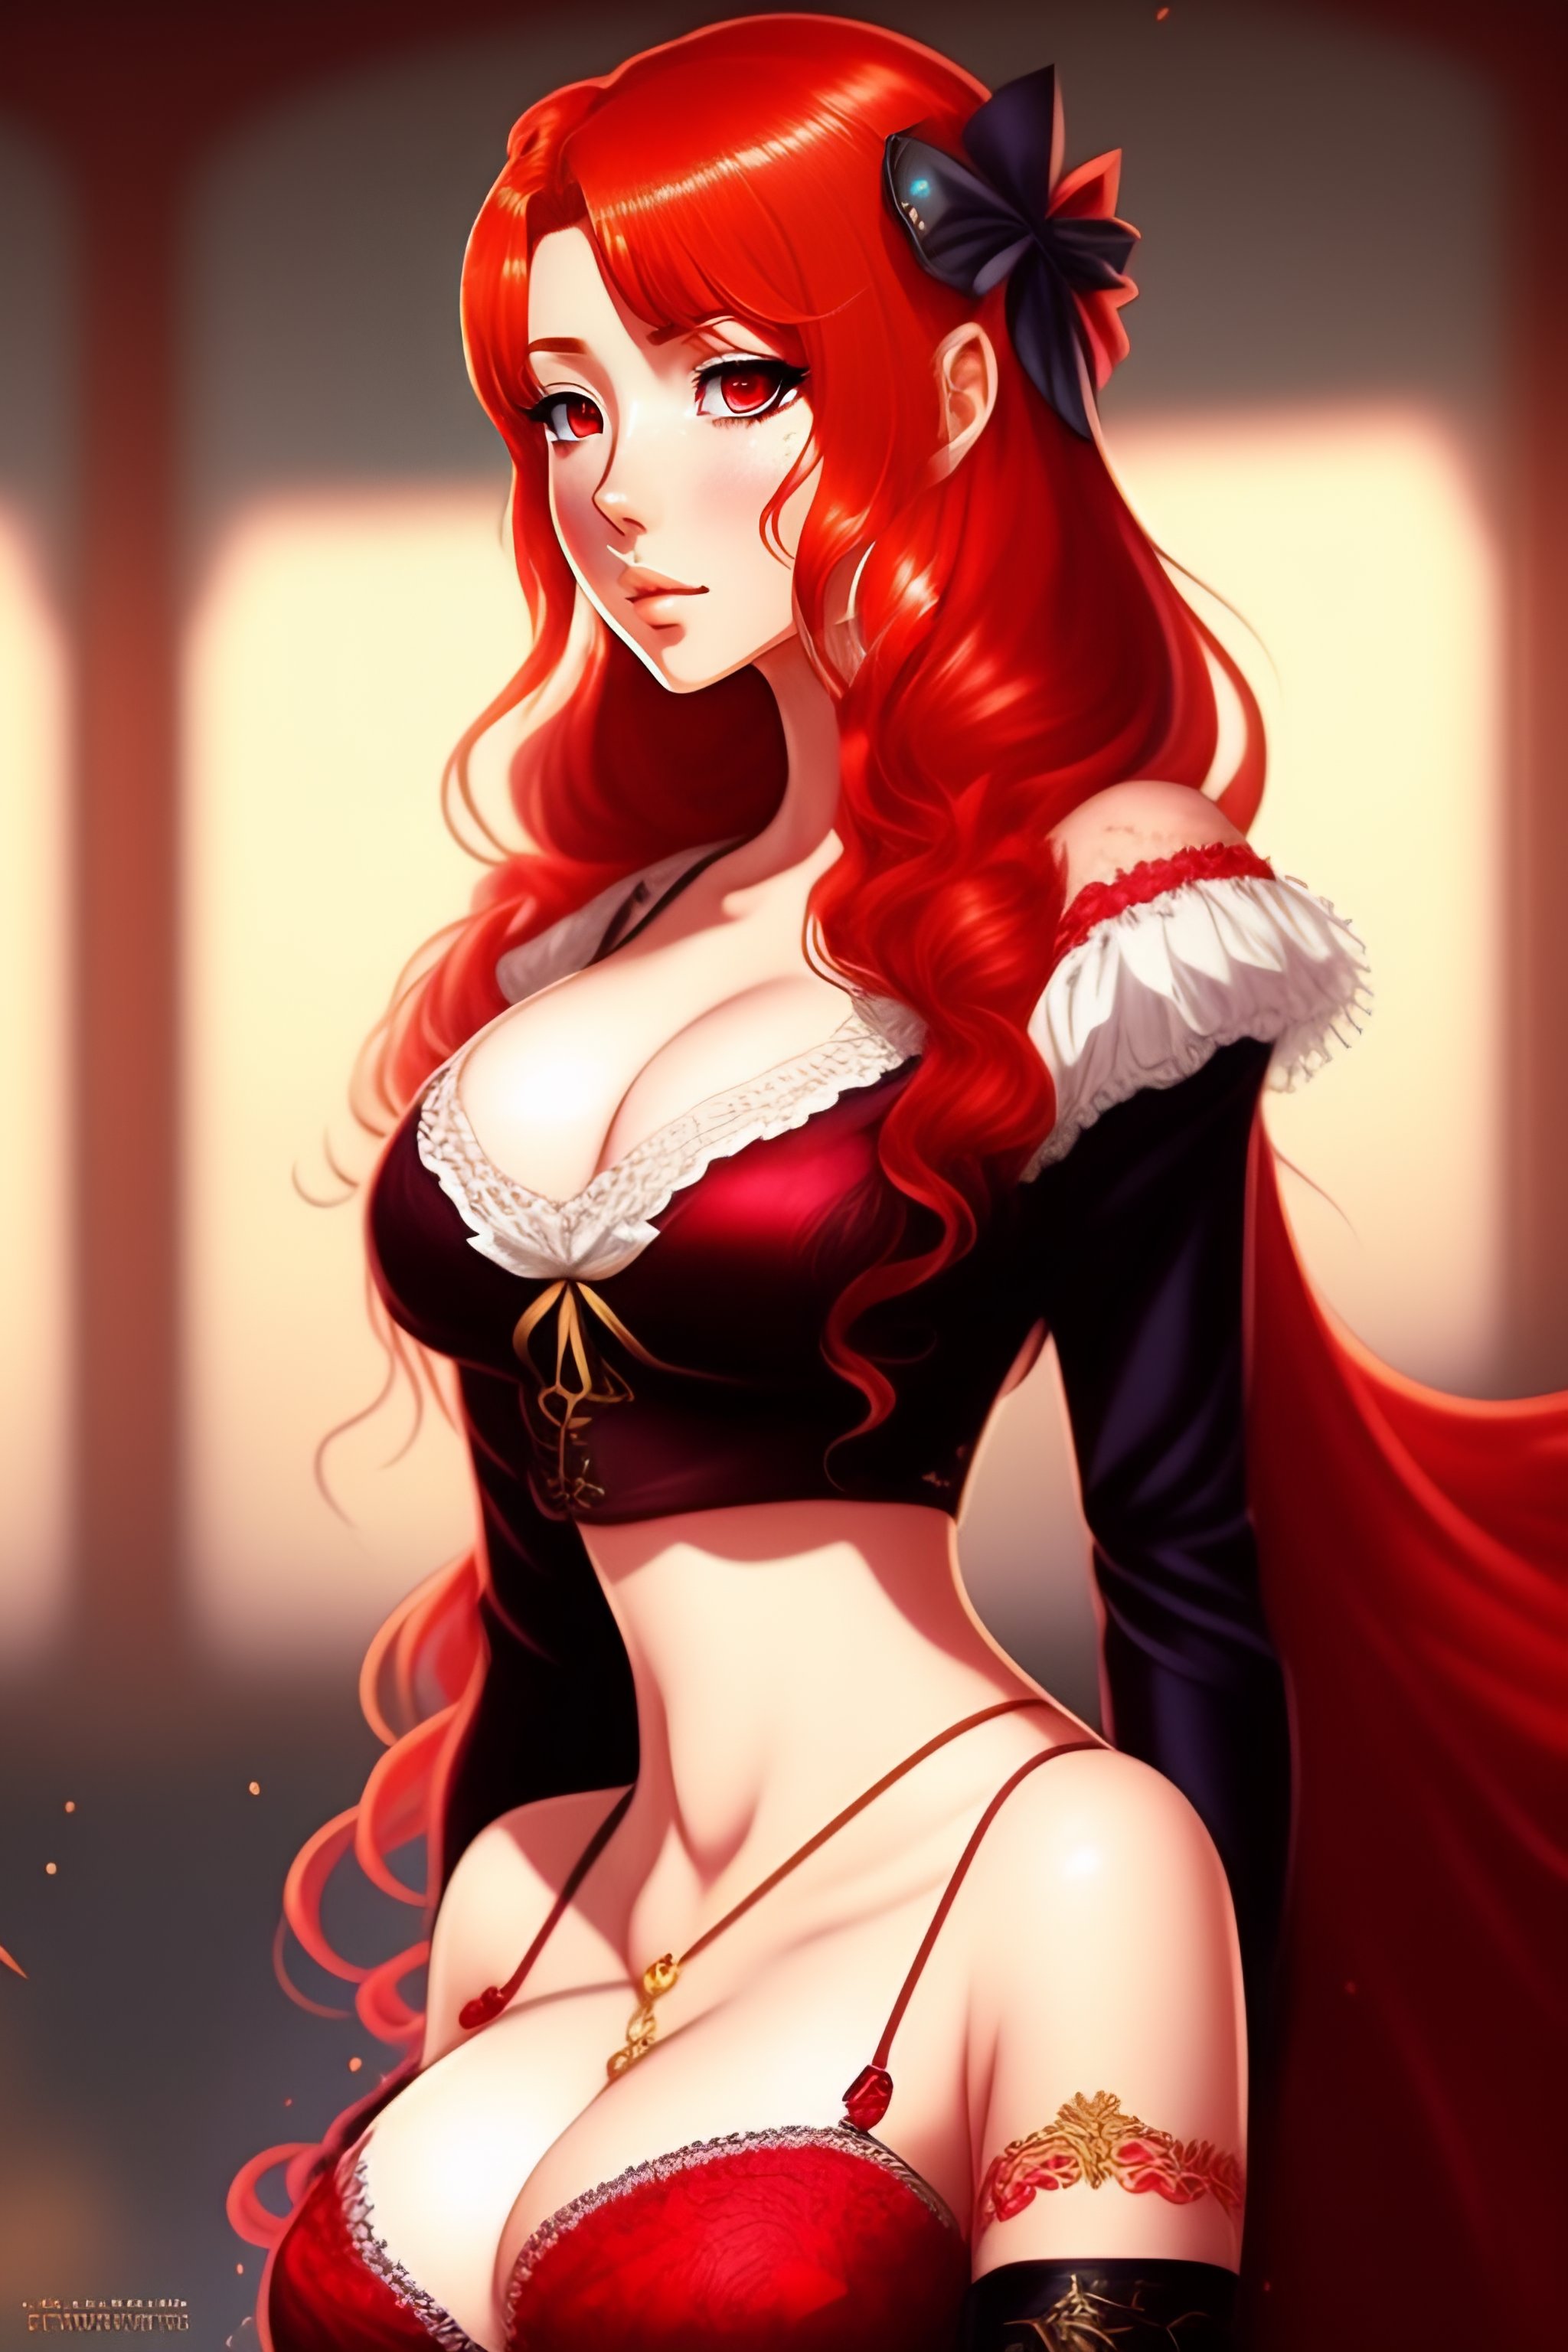 Sexy Anime Girl With Red Hair ei e